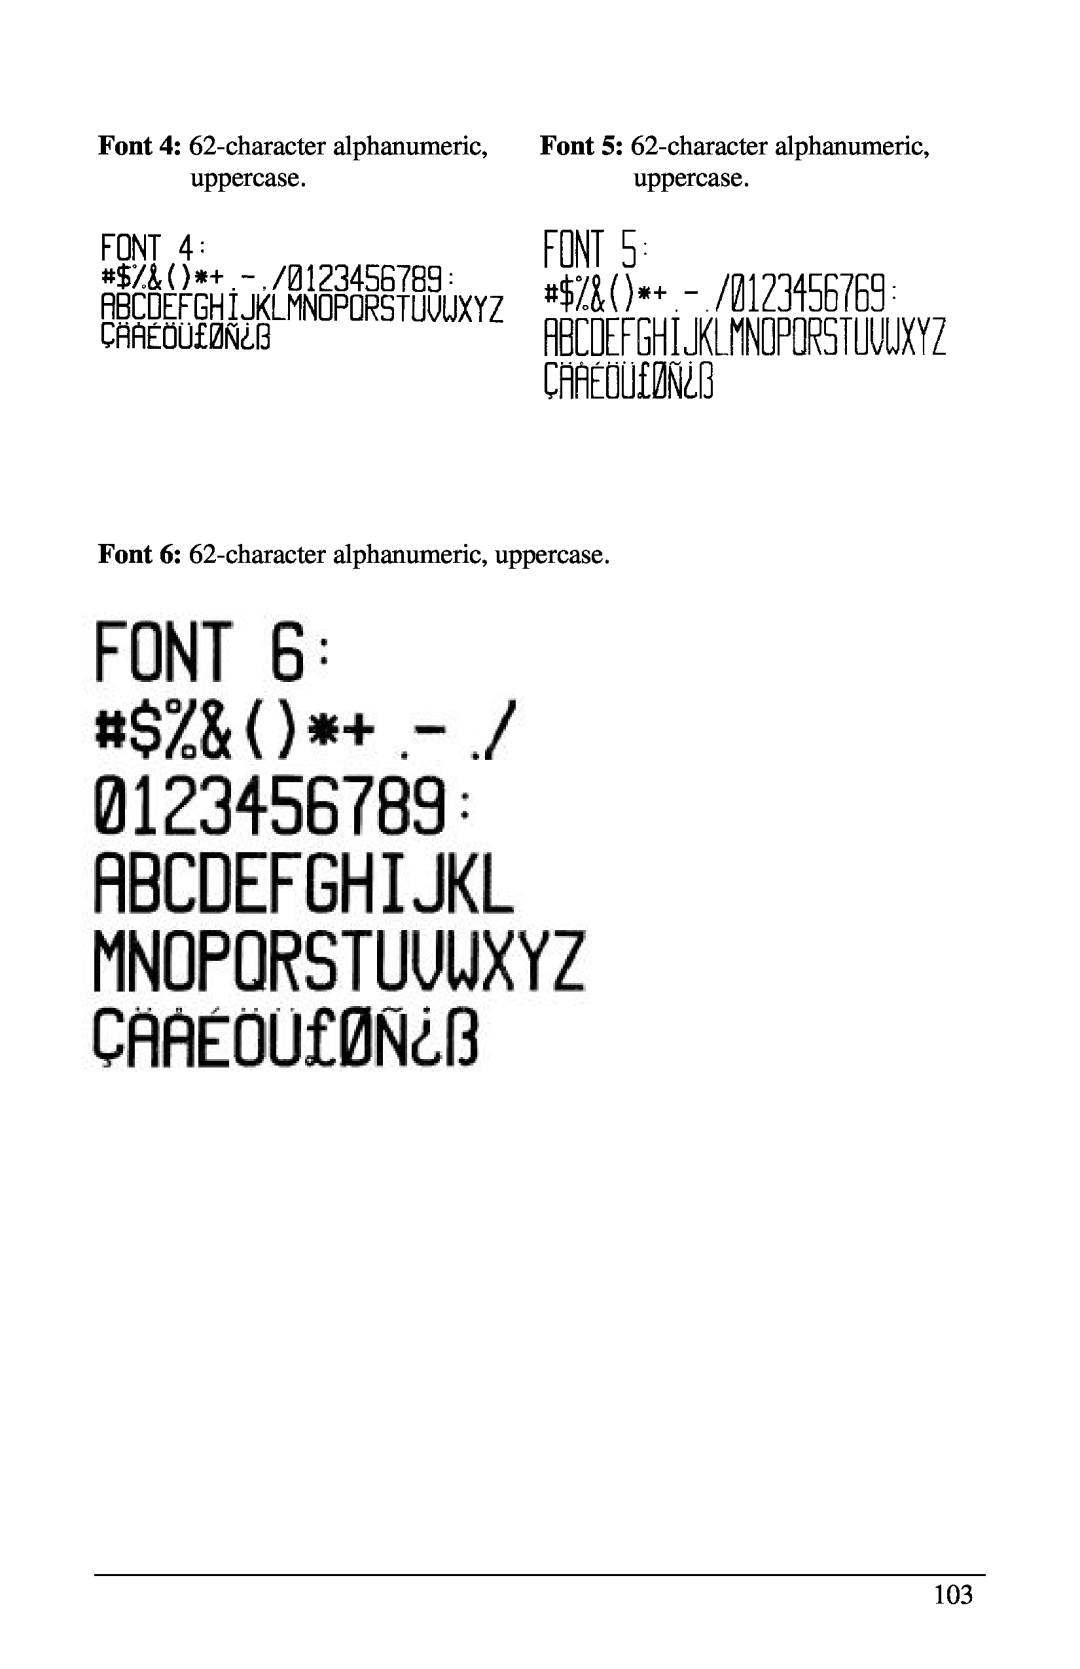 Brady 2461, 3481, 6441 manual Font 4 62-character alphanumeric, Font 5 62-character alphanumeric, uppercase 